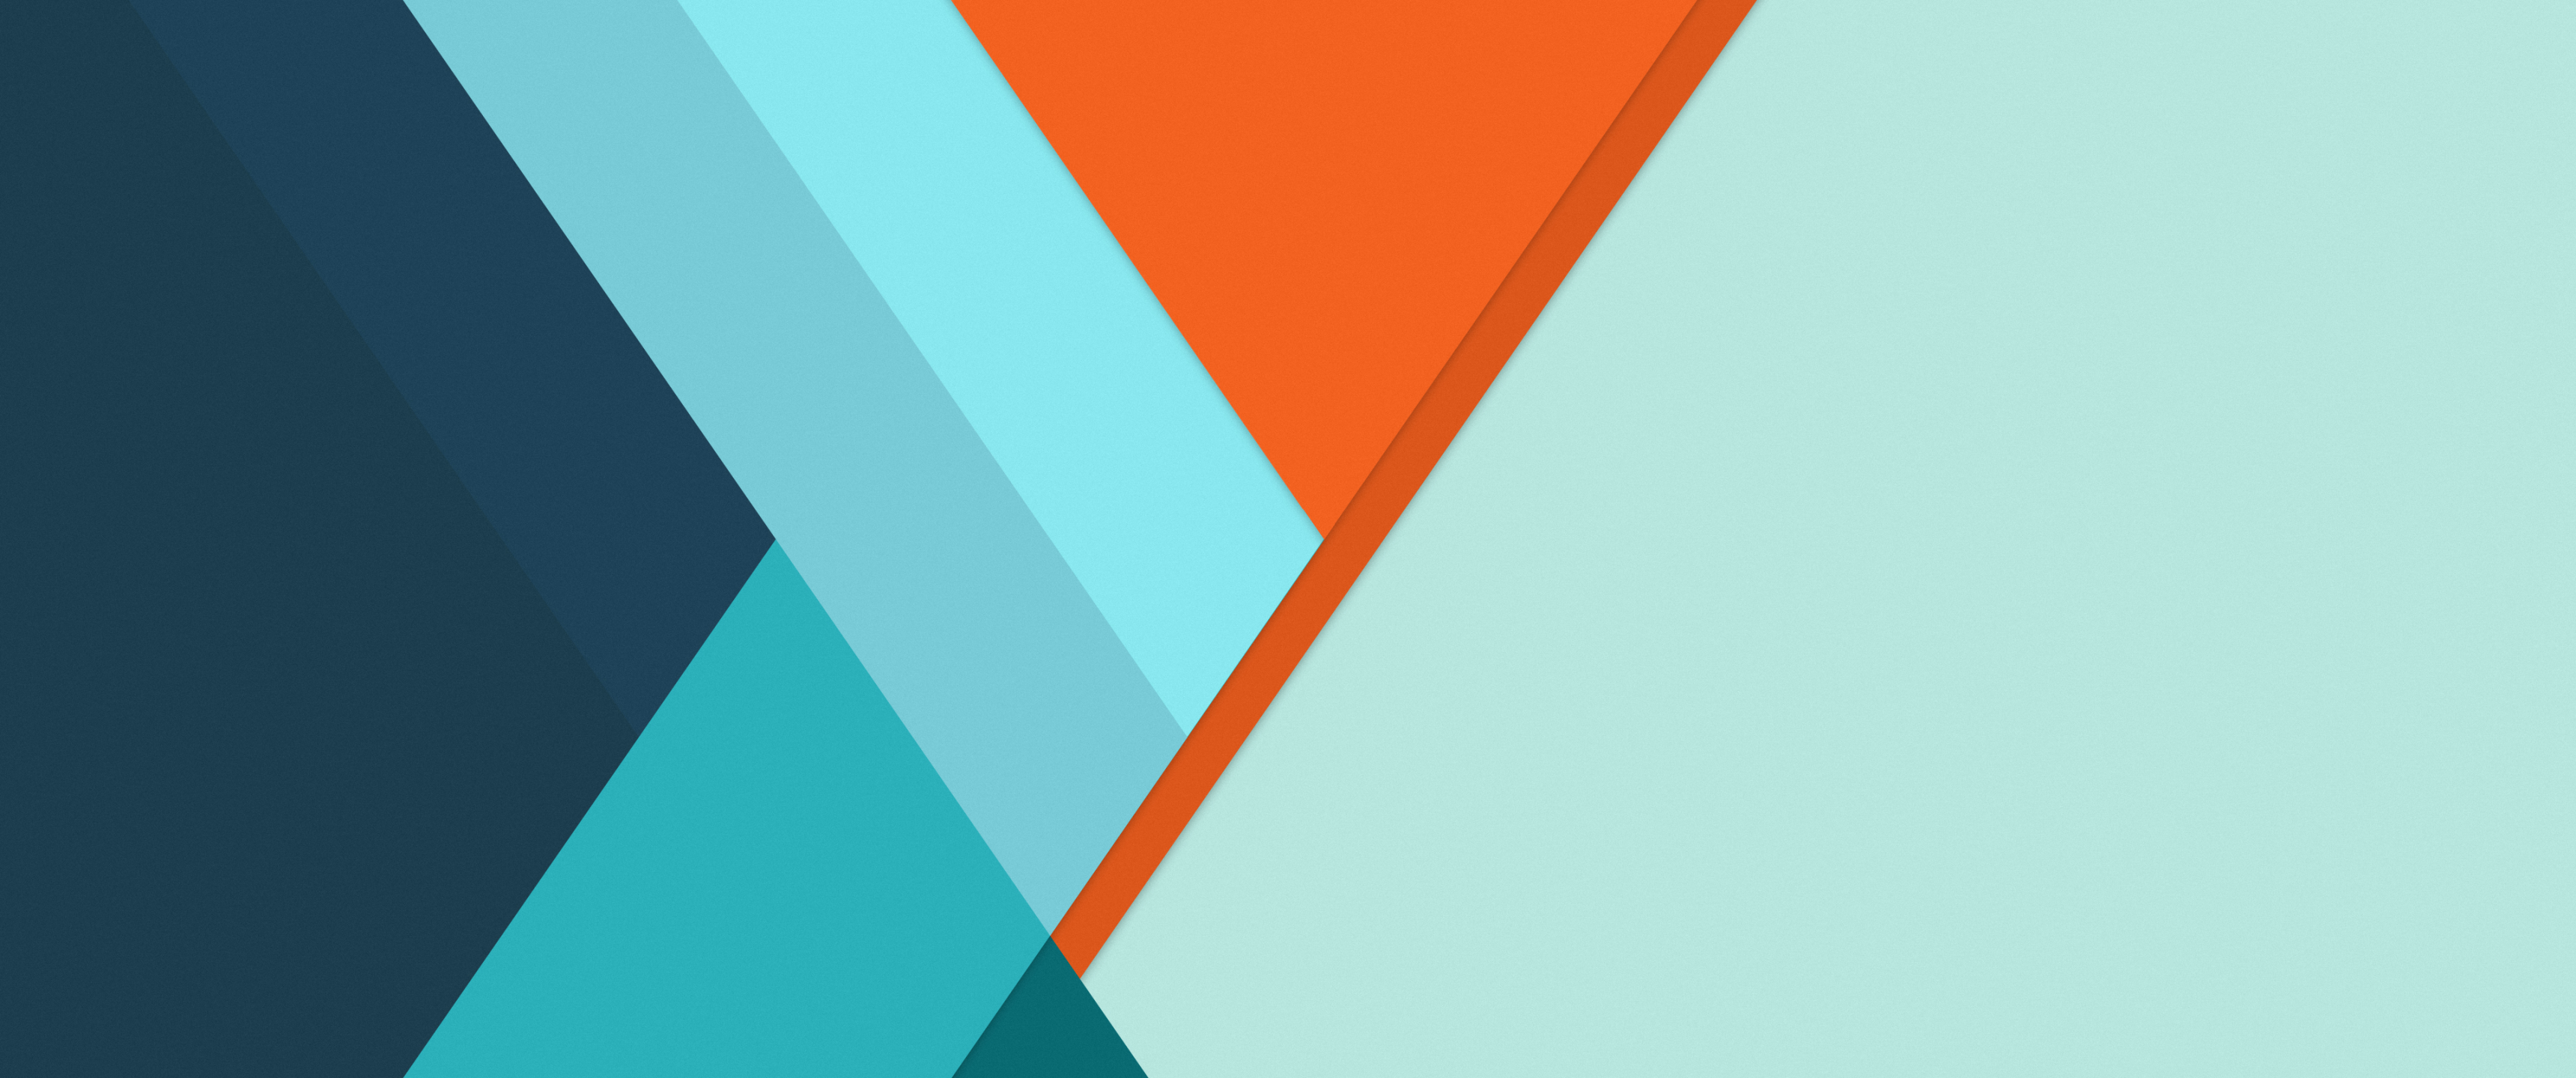 Material Design Wallpaper 4K, Minimalist, Orange, Stripes, Blue, Flat, Abstract